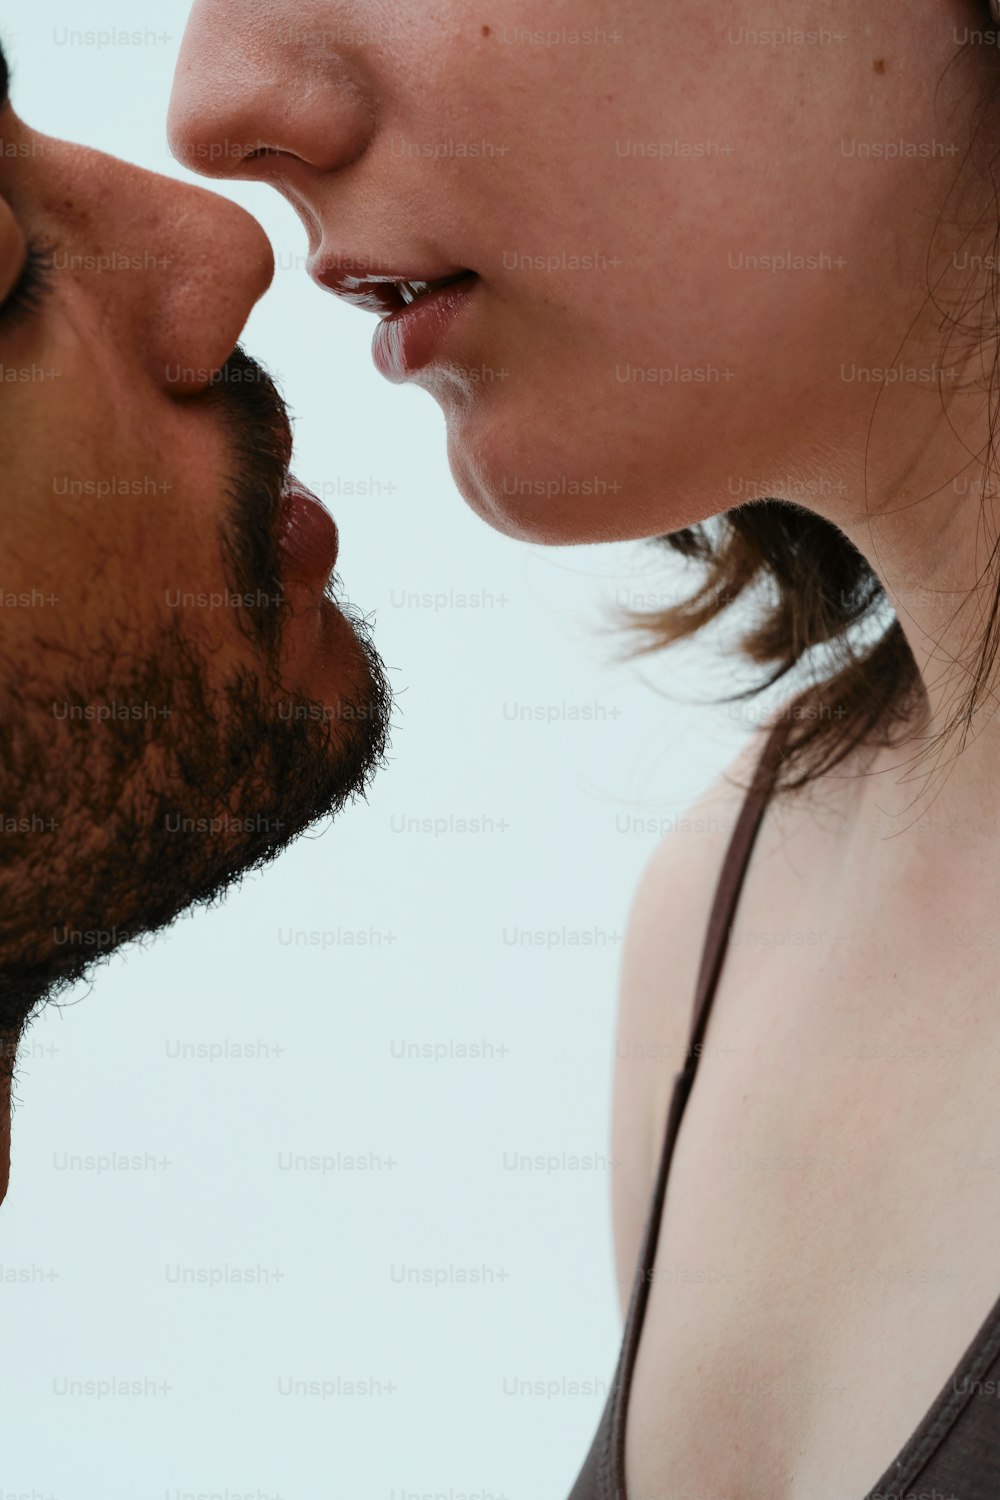 Un primer plano de una persona besando a otra persona